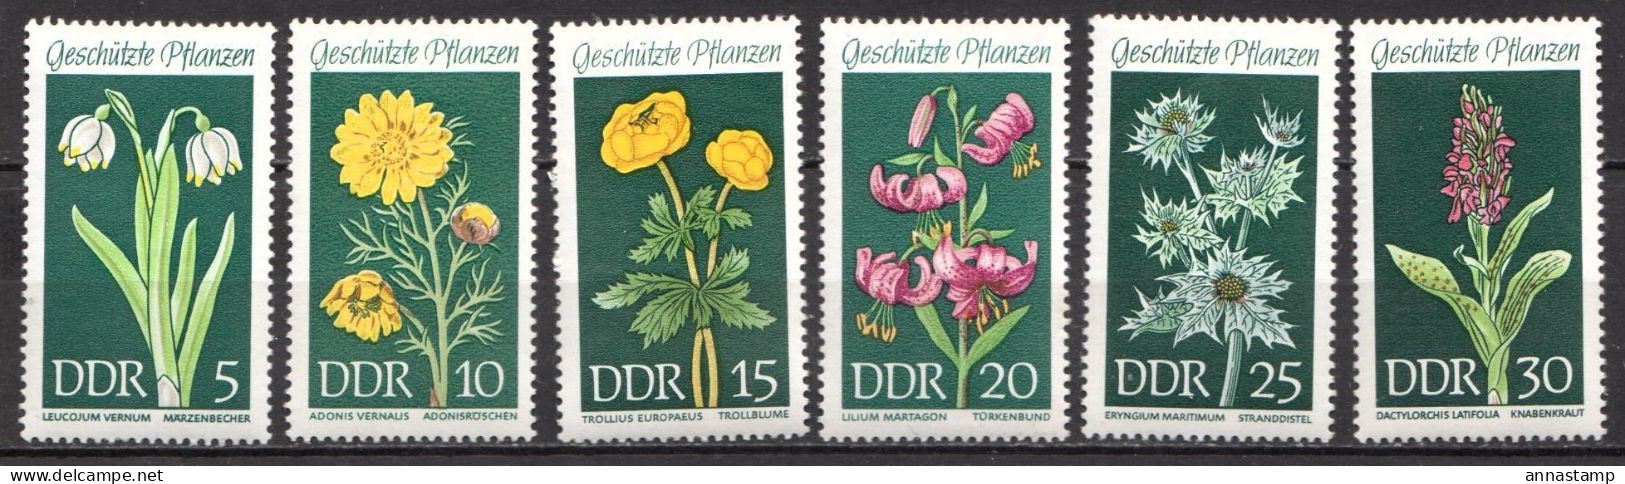 Germany / DDR MNH Set - Plantes Médicinales